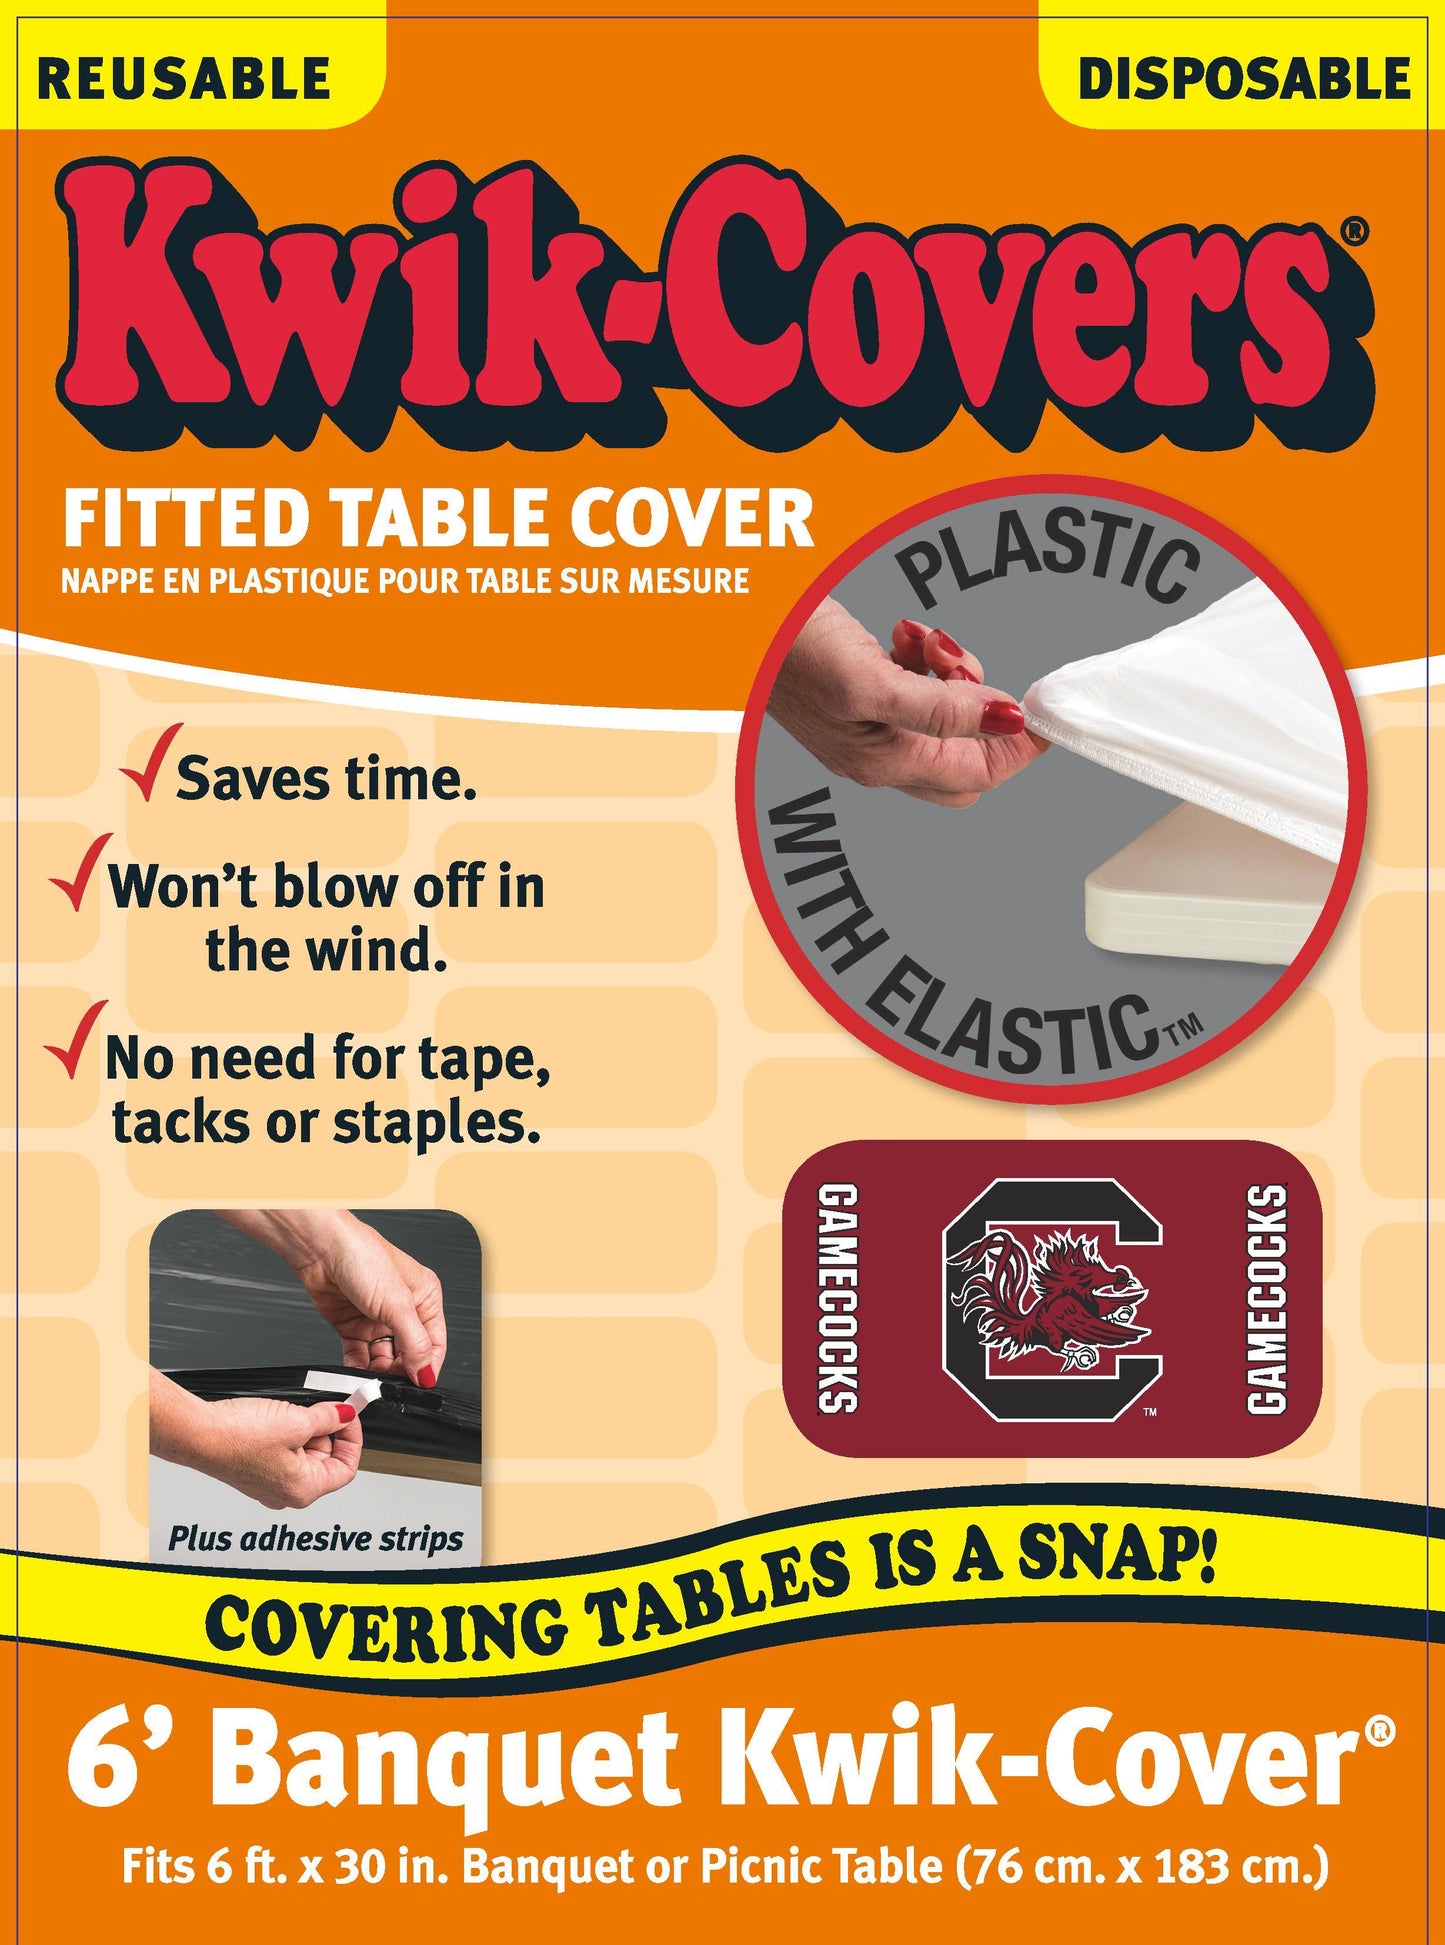 Collegiate Kwik-Covers Rectangle Plastic Table Cover (University of South Carolina)